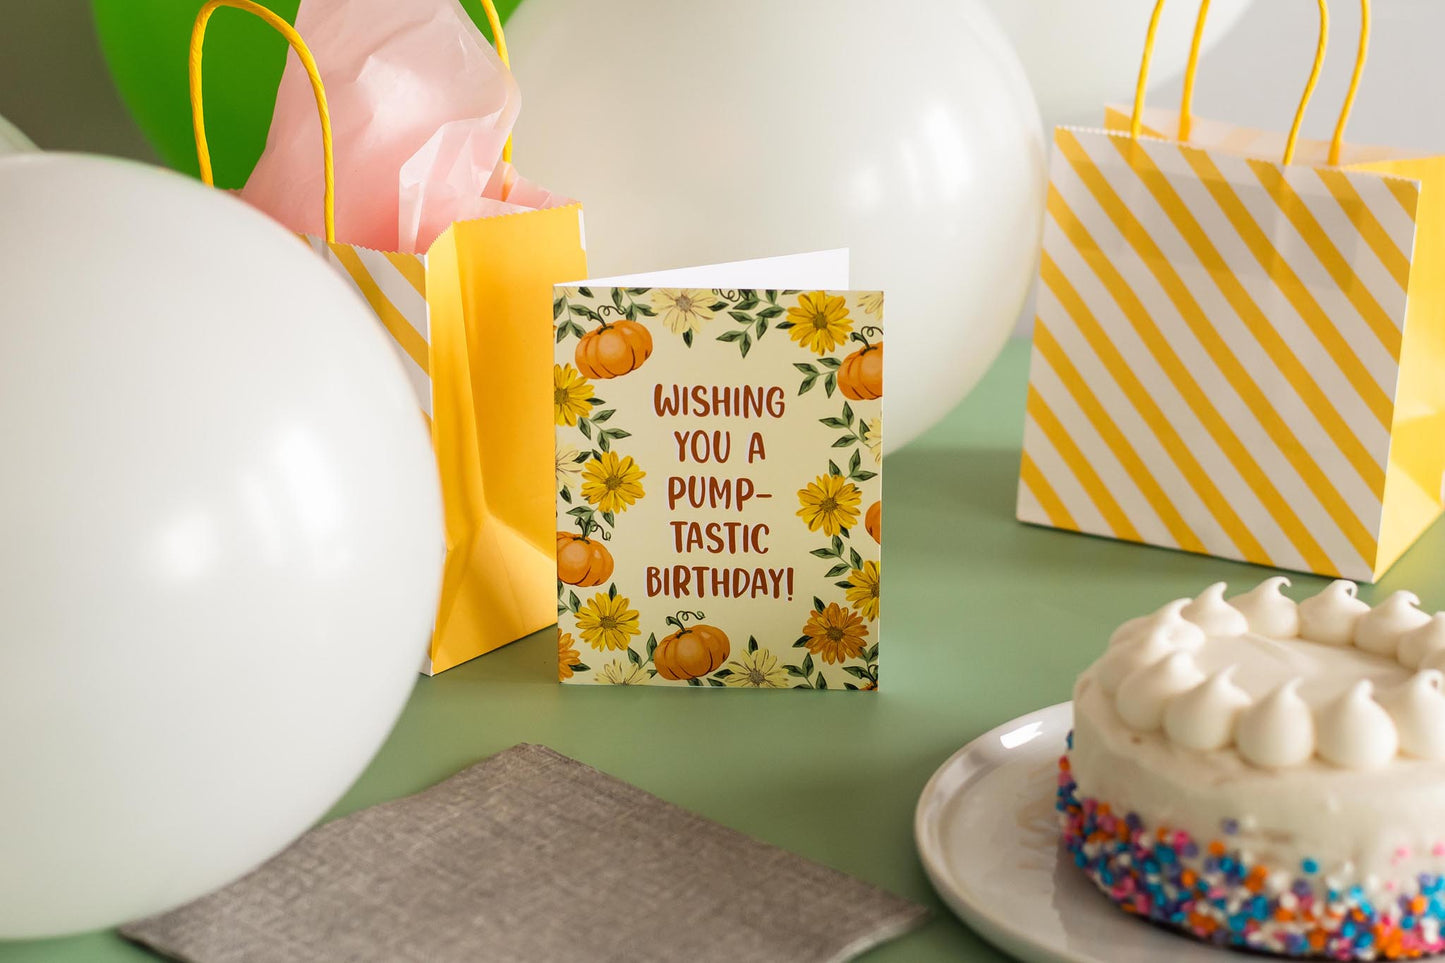 Wishing You A Pump-tastic Birthday! - Greeting Card